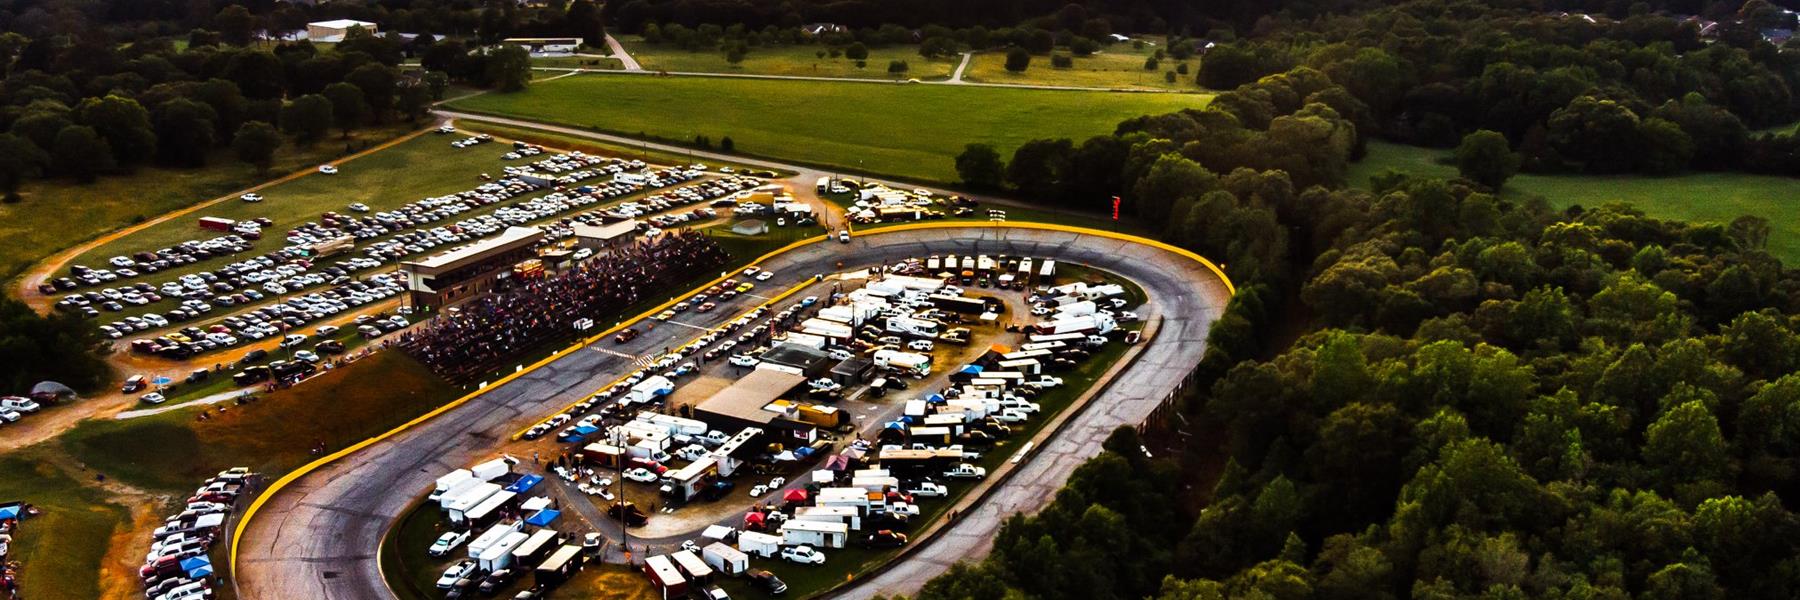 9/10/2021 - Anderson Motor Speedway